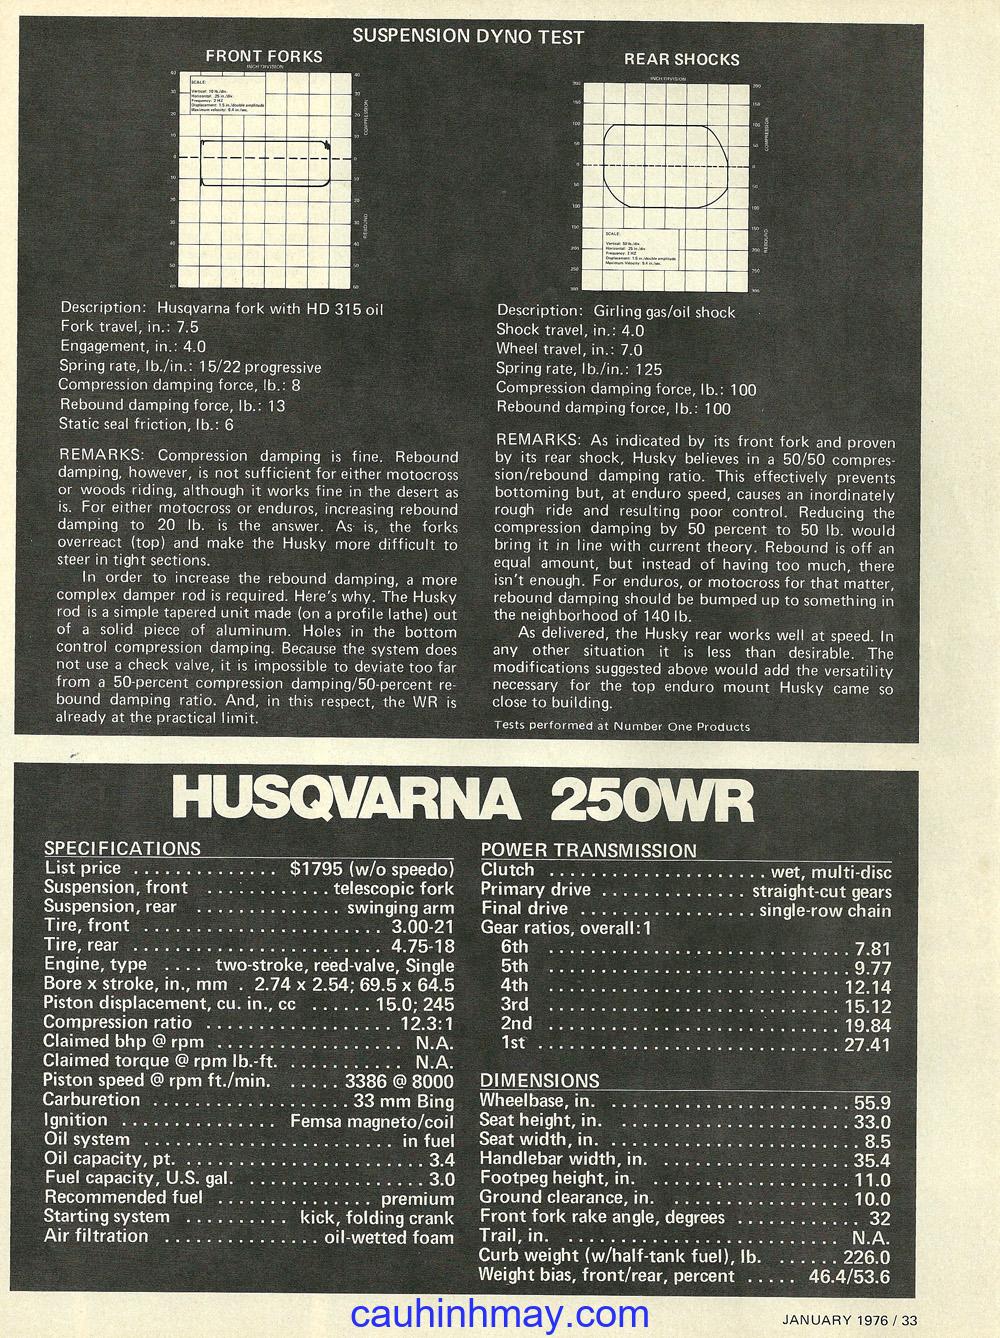 1976 HUSQVARNA WR 250 - cauhinhmay.com